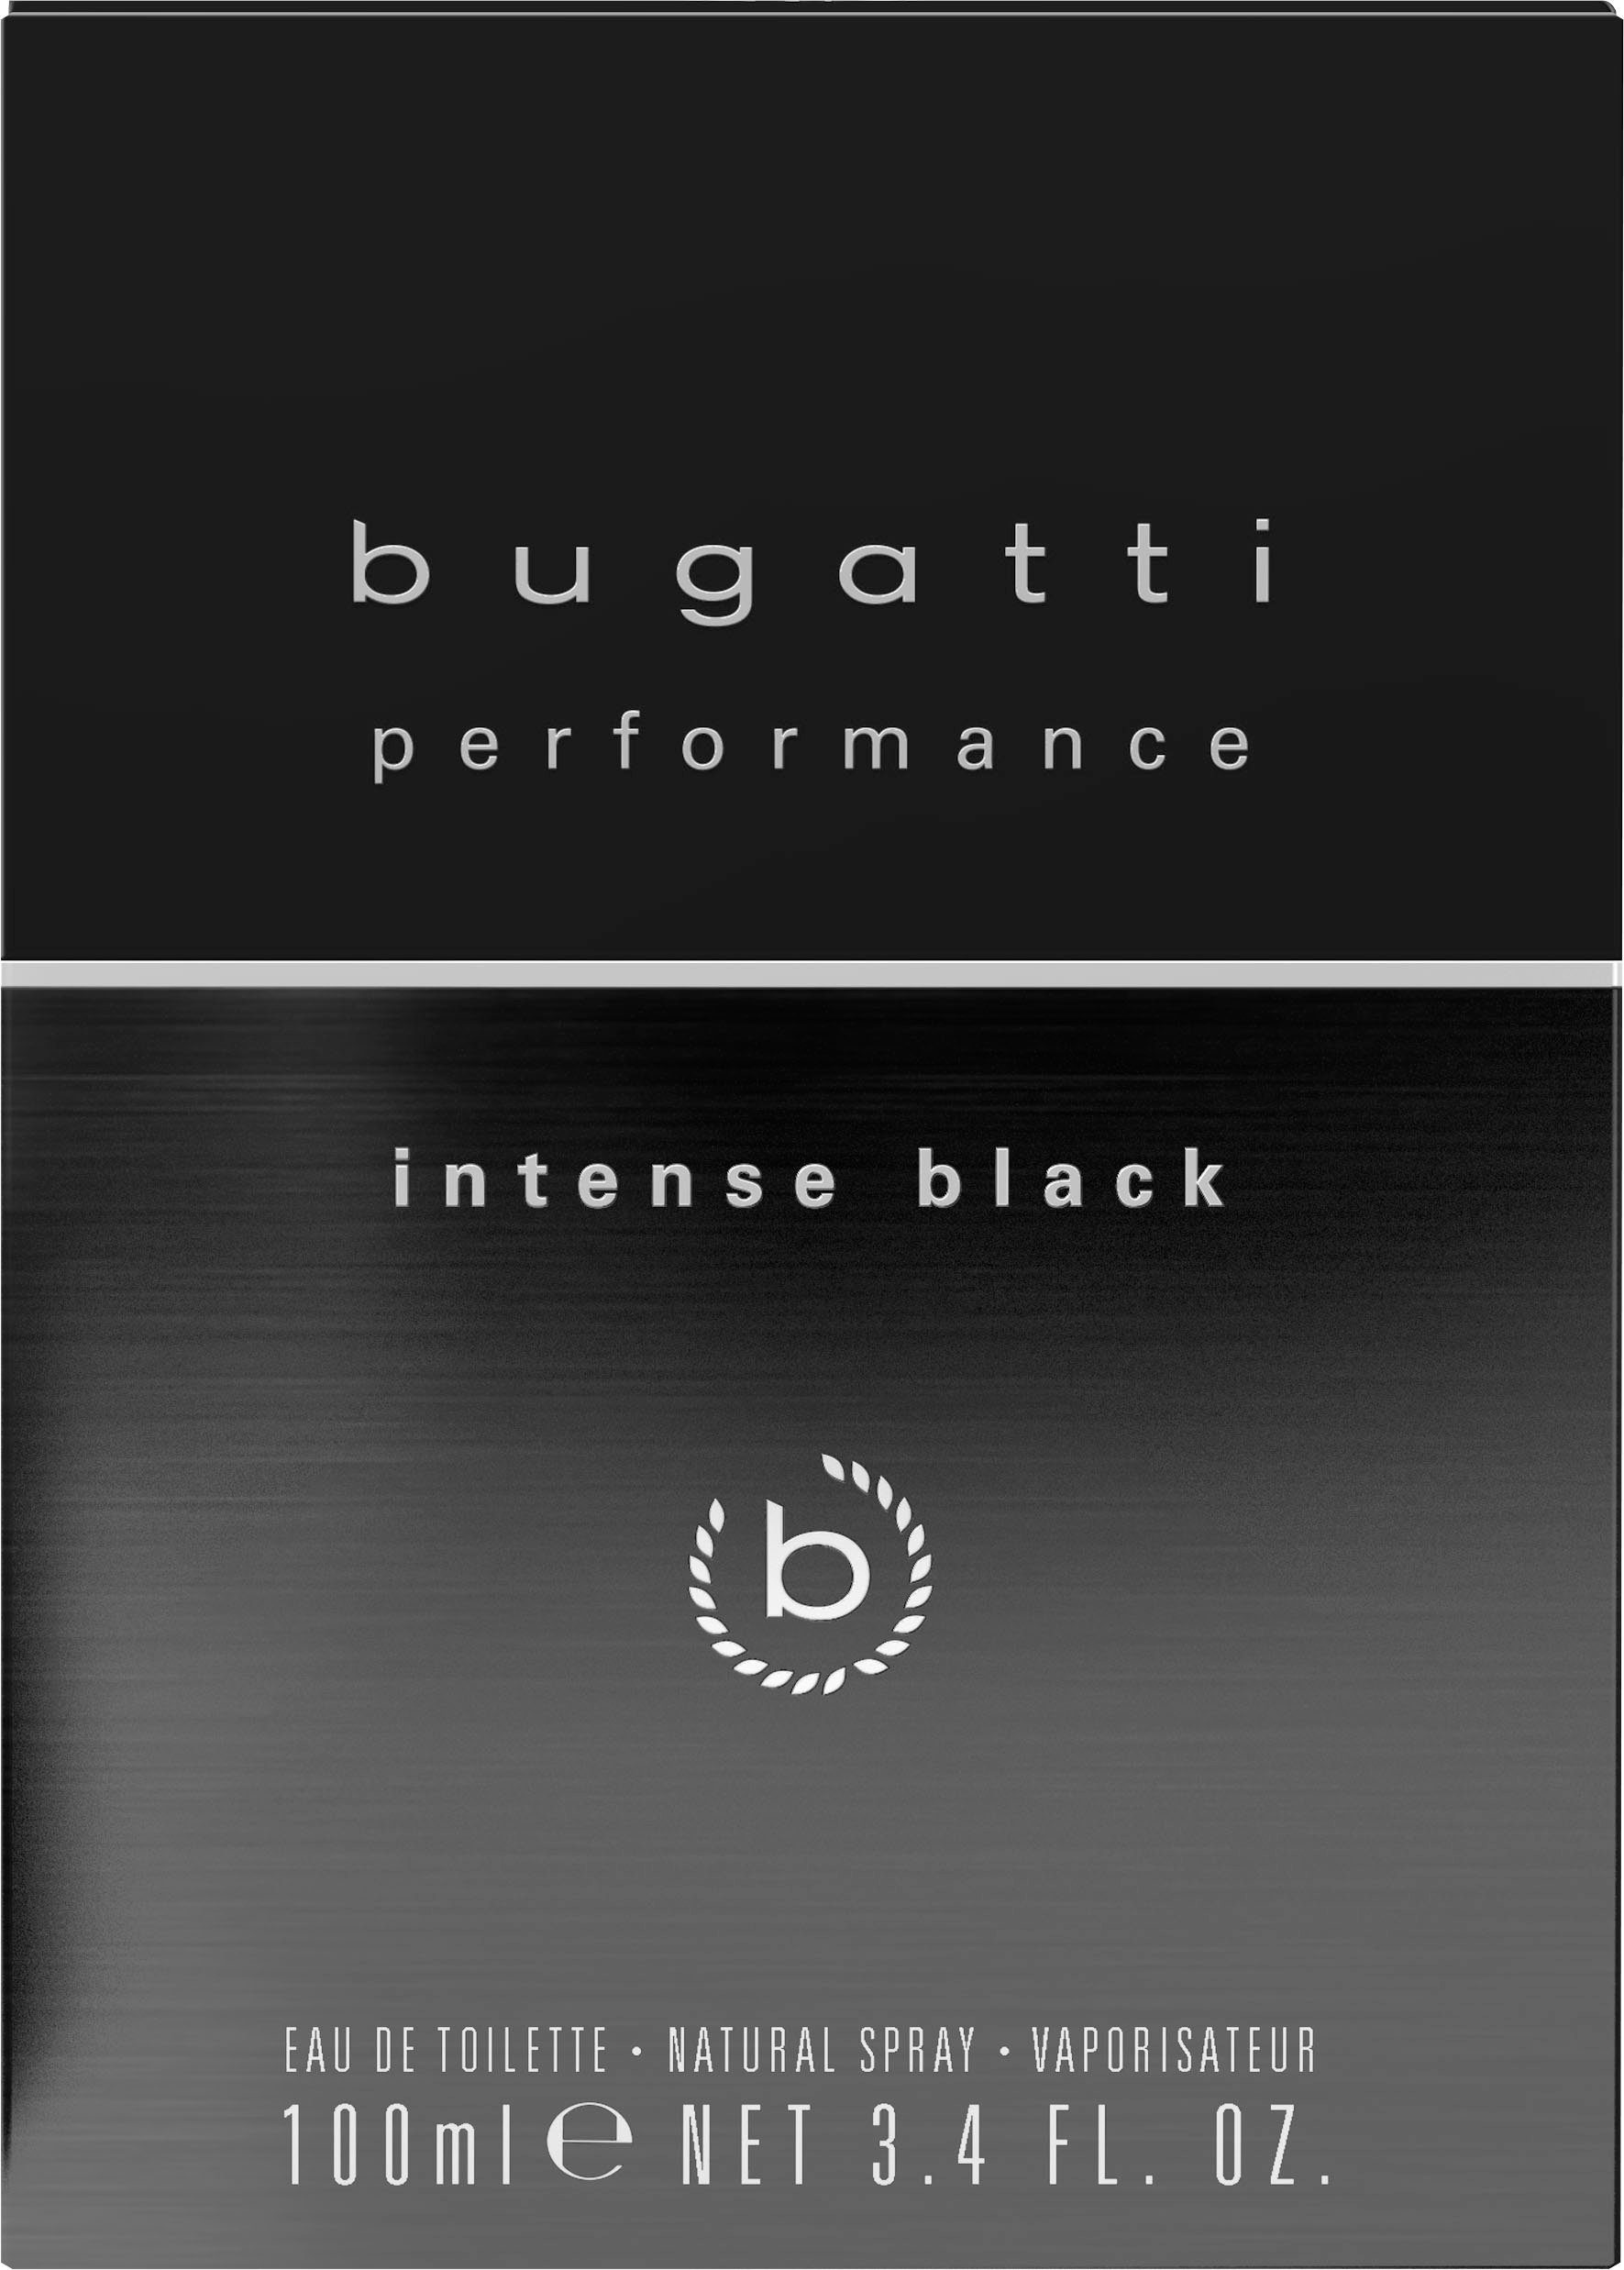 Toilette 100ml Intense Black de EdT Performance Eau bugatti BUGATTI